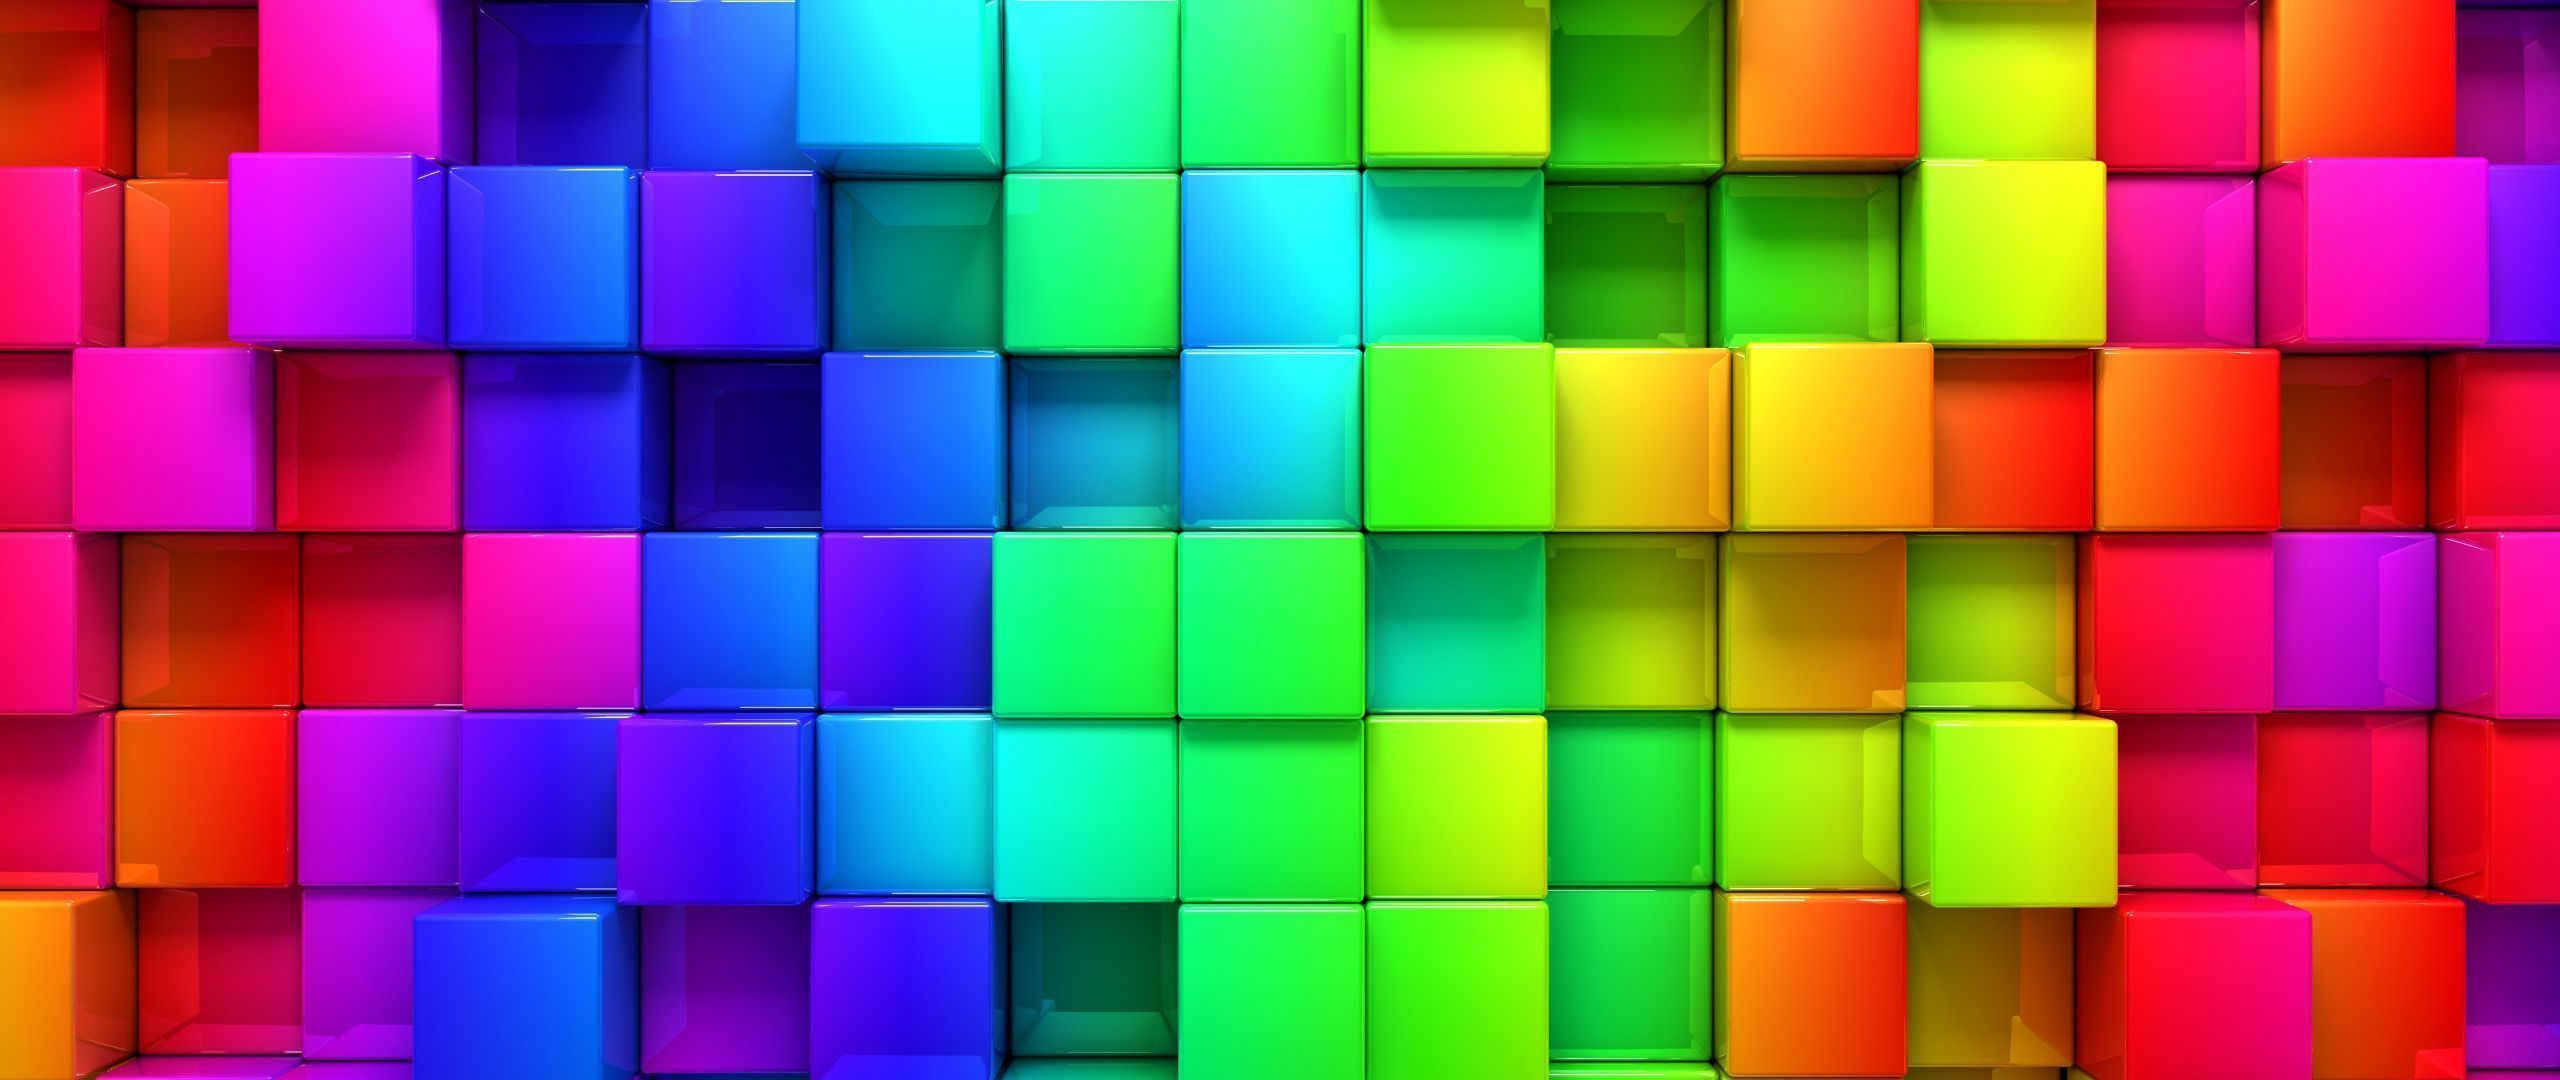 Download Wallpaper 2560x1080 Blocks, Rainbow, 3d graphics ...